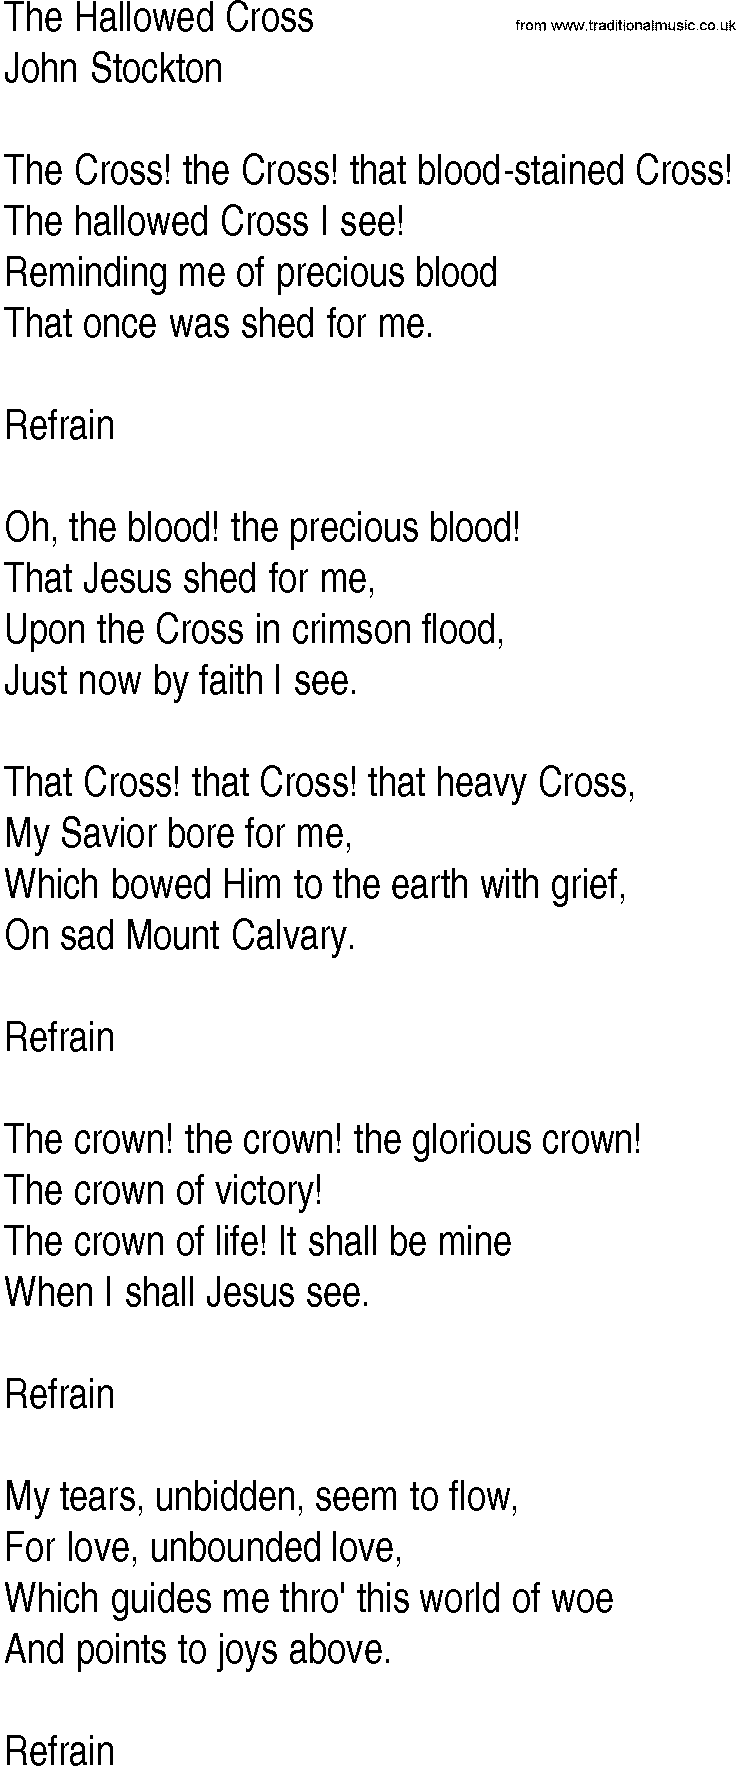 Hymn and Gospel Song: The Hallowed Cross by John Stockton lyrics